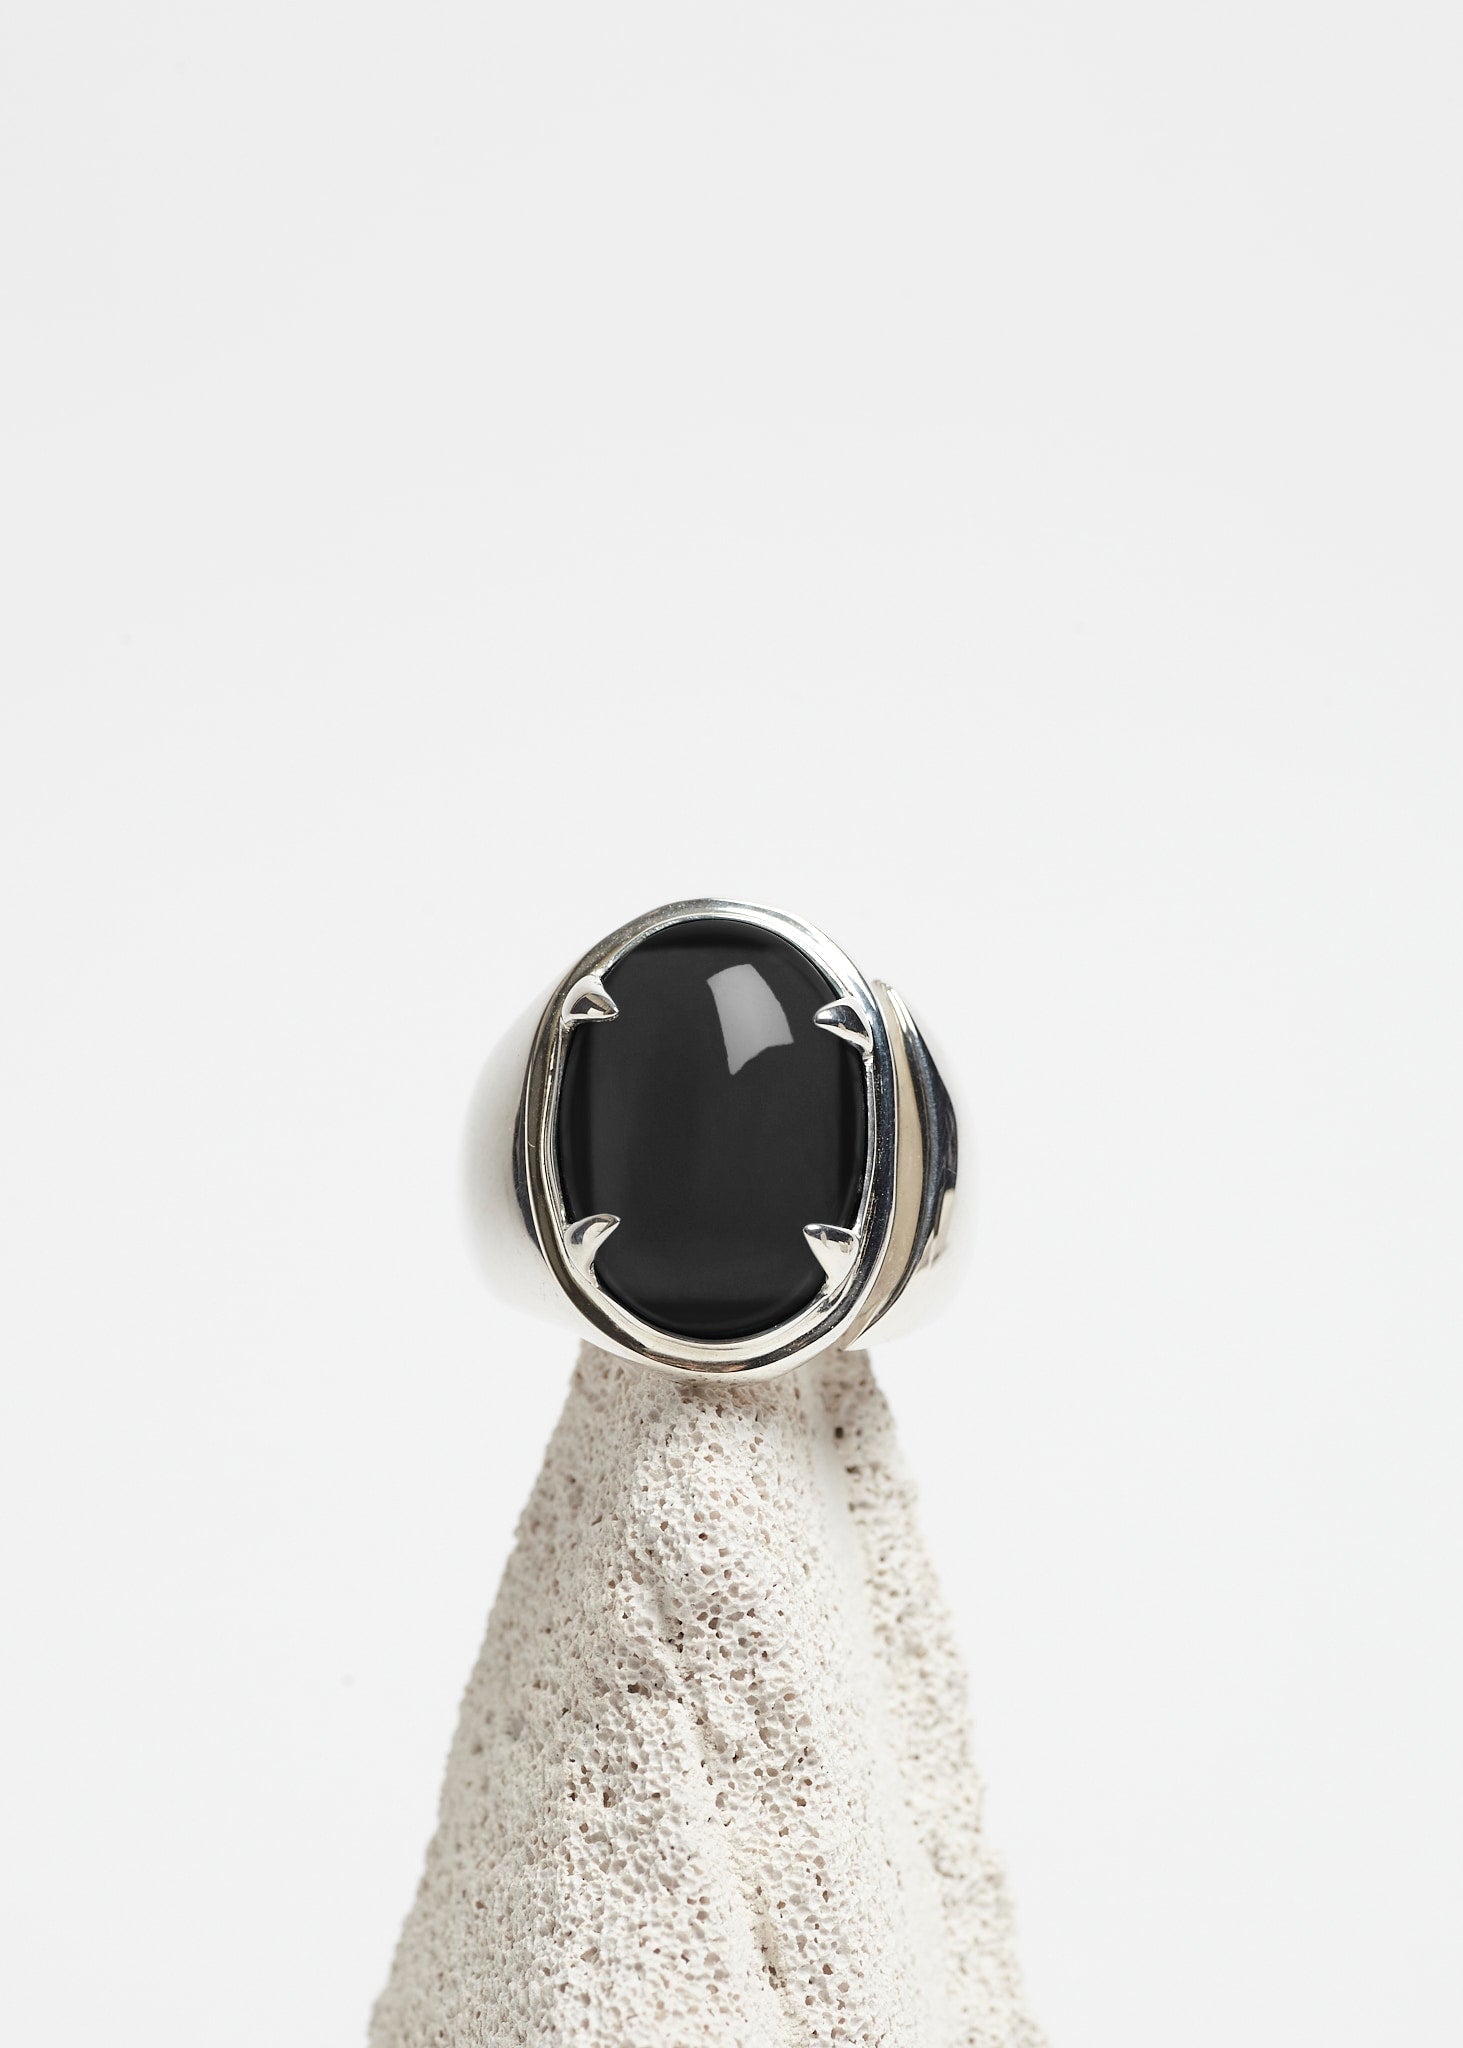 Molded Onyx Signet Ring | Onyx - Rings - Cornelia Webb - 1